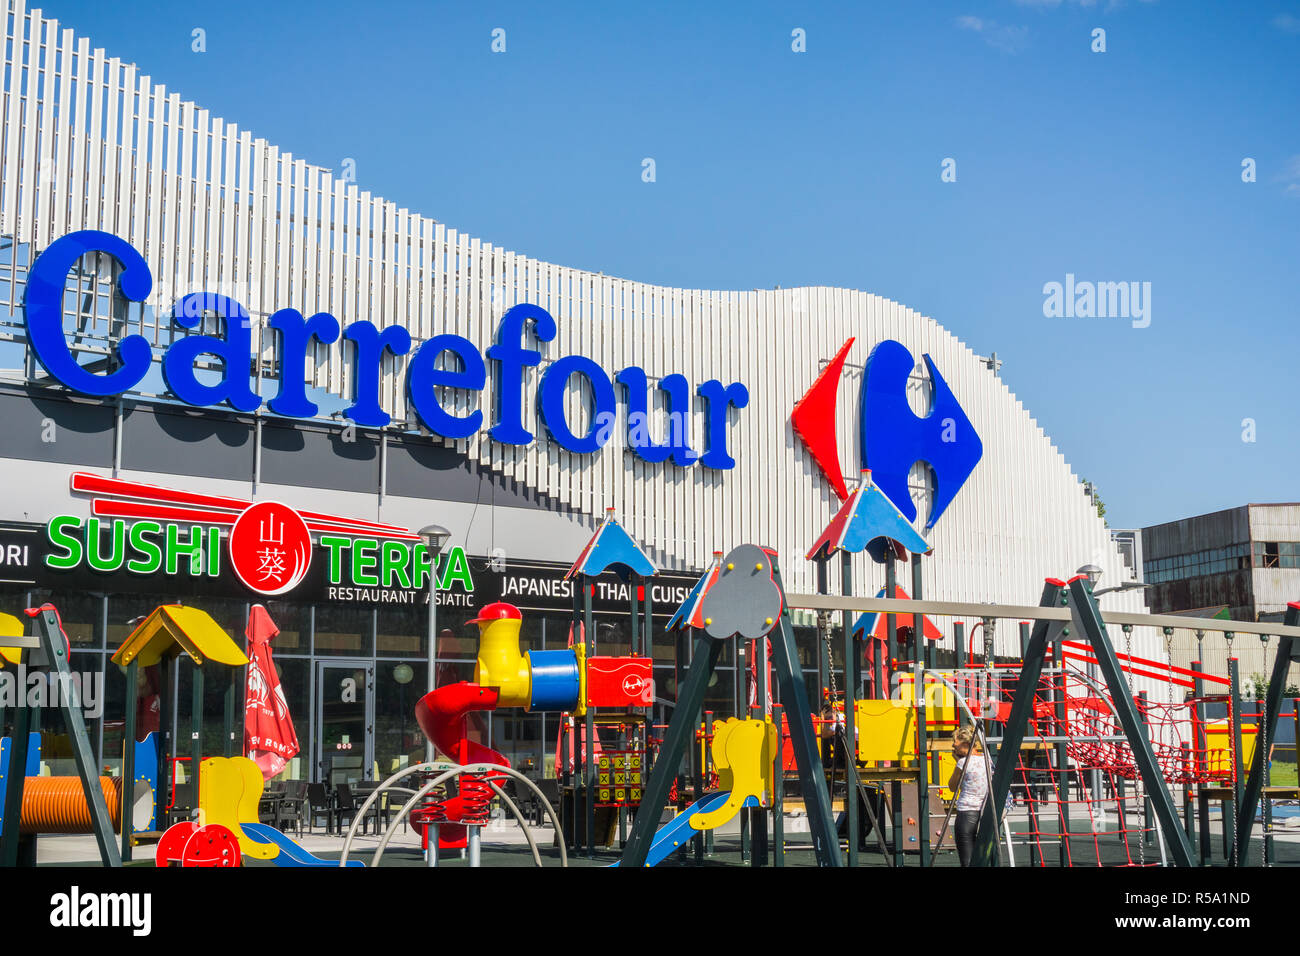 September 13, 2017 Bucharest, Romania - Carrefour logo above the store entrance Stock Photo